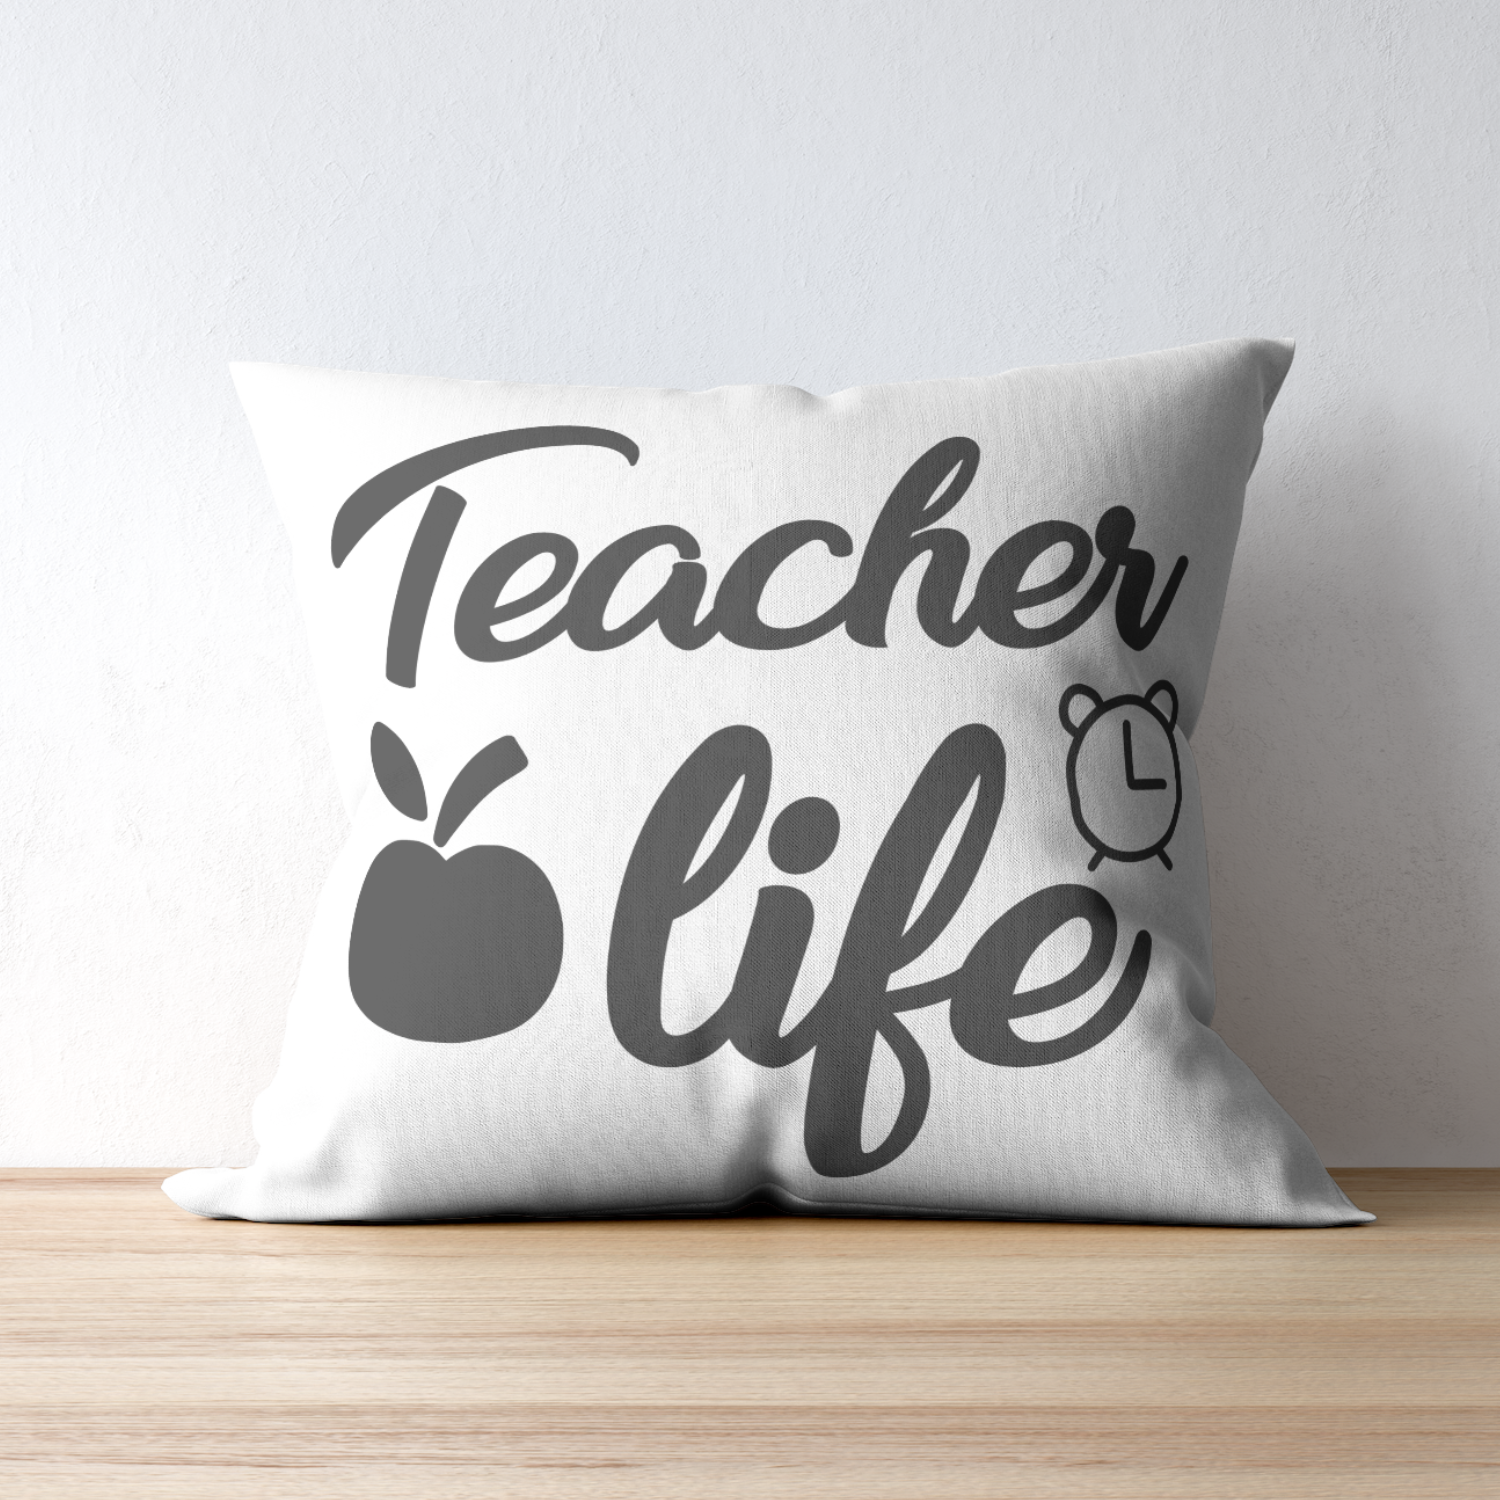 Teacher life SVG | Digital Download | Cut File | SVG - Only The Sweet Stuff